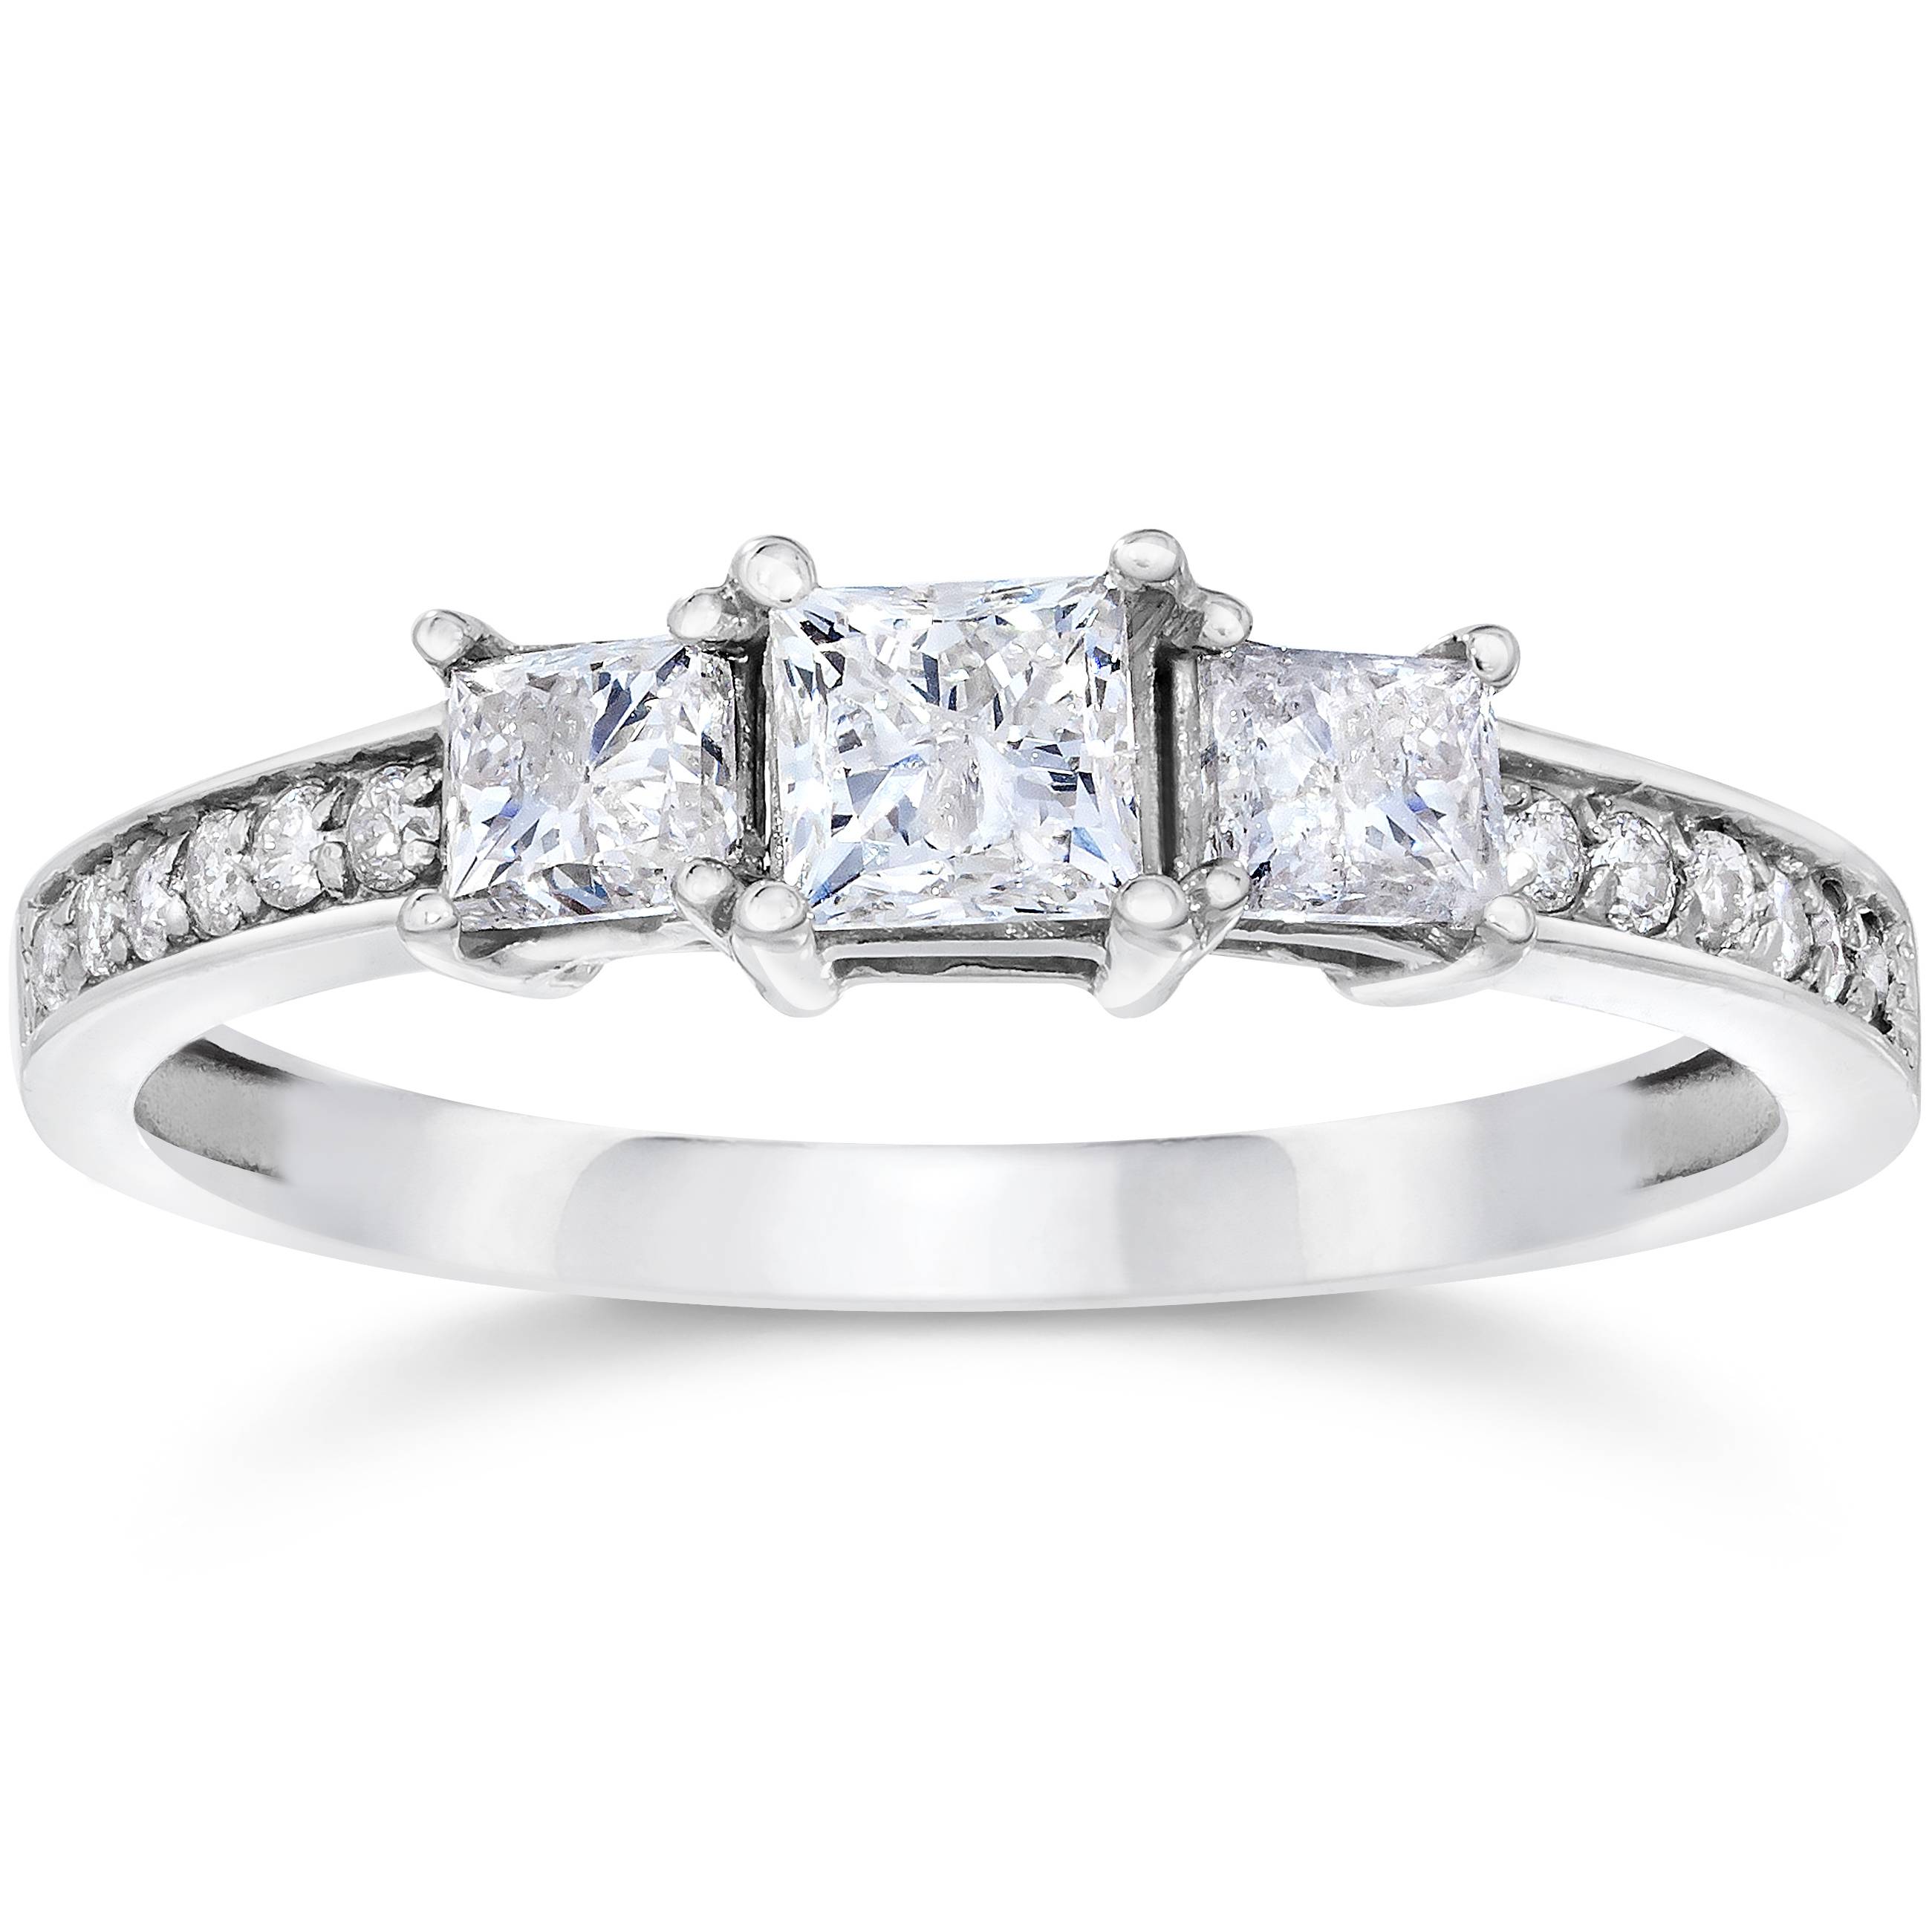 3 Stone Diamond Engagement Rings | Three Stone Engagement Rings | Valina  Three-Stone Style Engagement Rings - Engagement Rings Settings With Side  Stones | Side Diamond Engagement Rings | Valina Engagement Ring